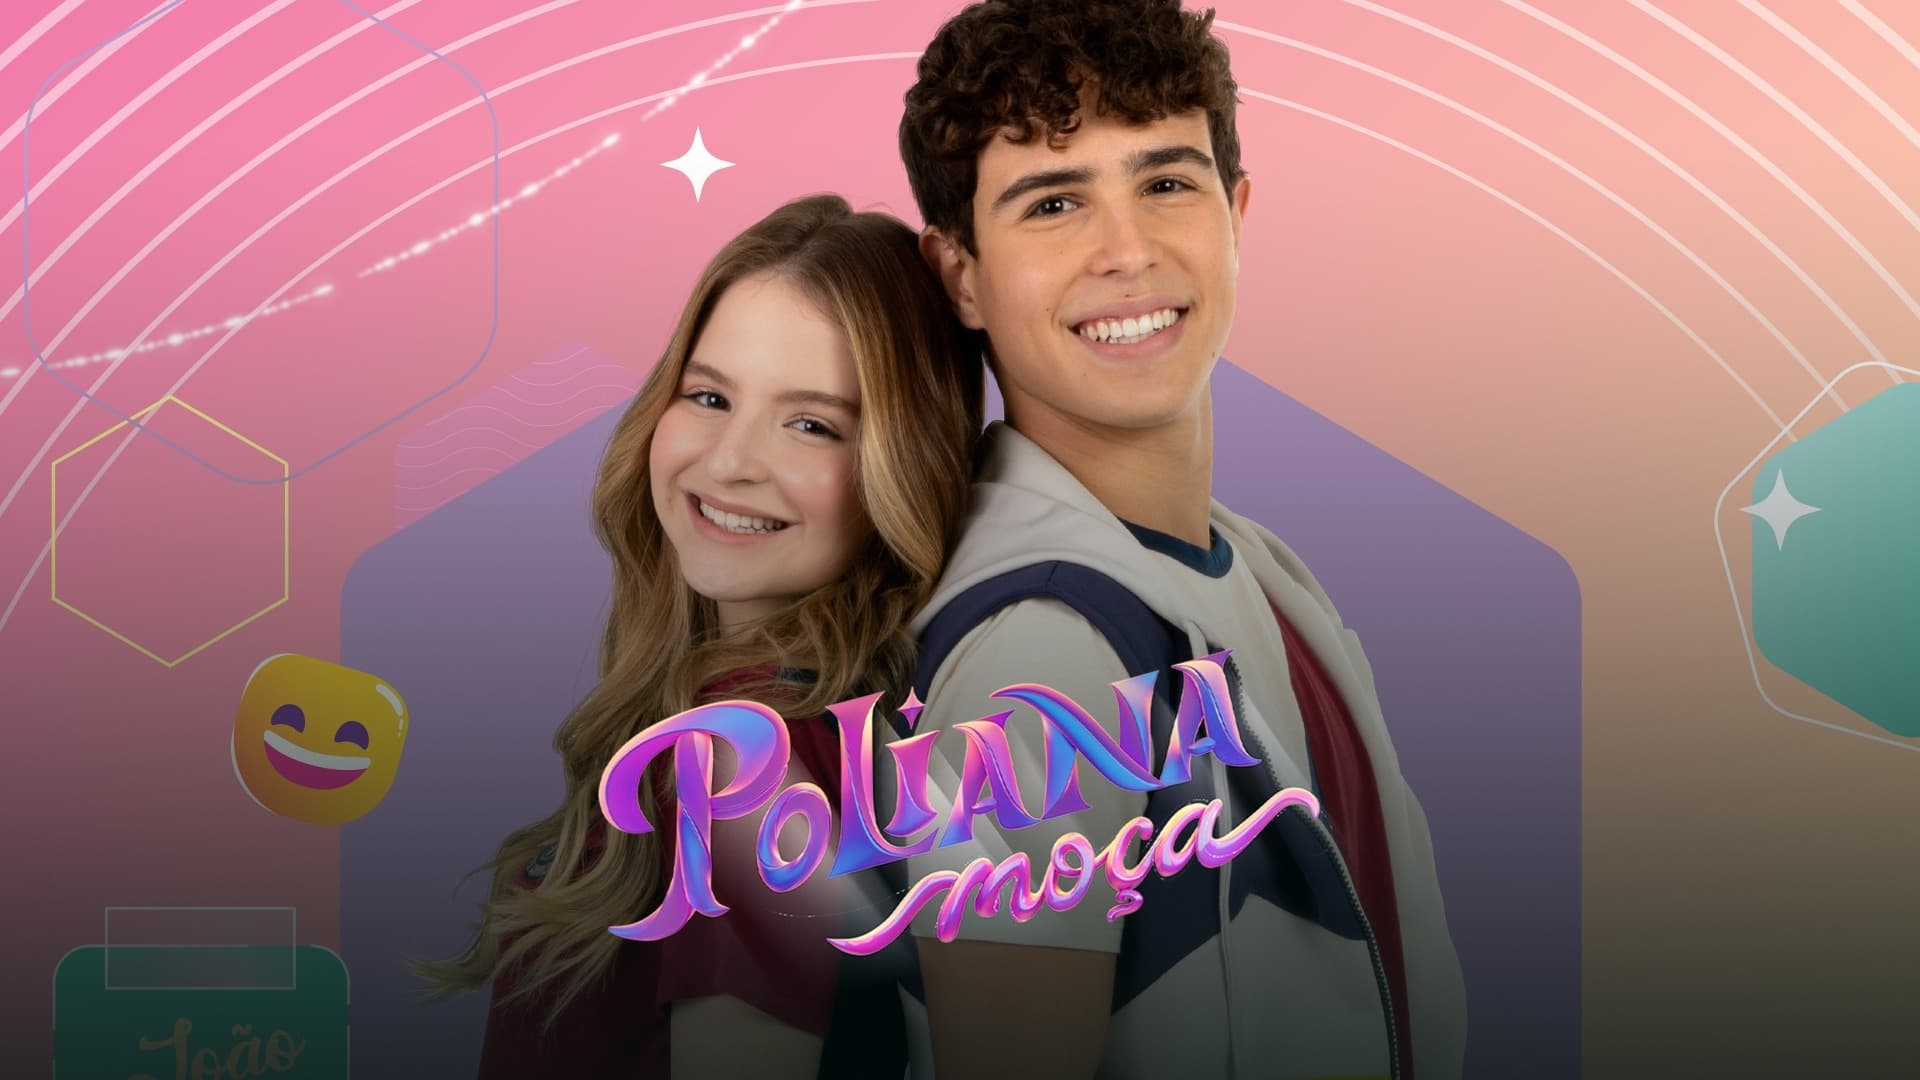 Poliana Moça - Season 1 Episode 99 : Episode 99